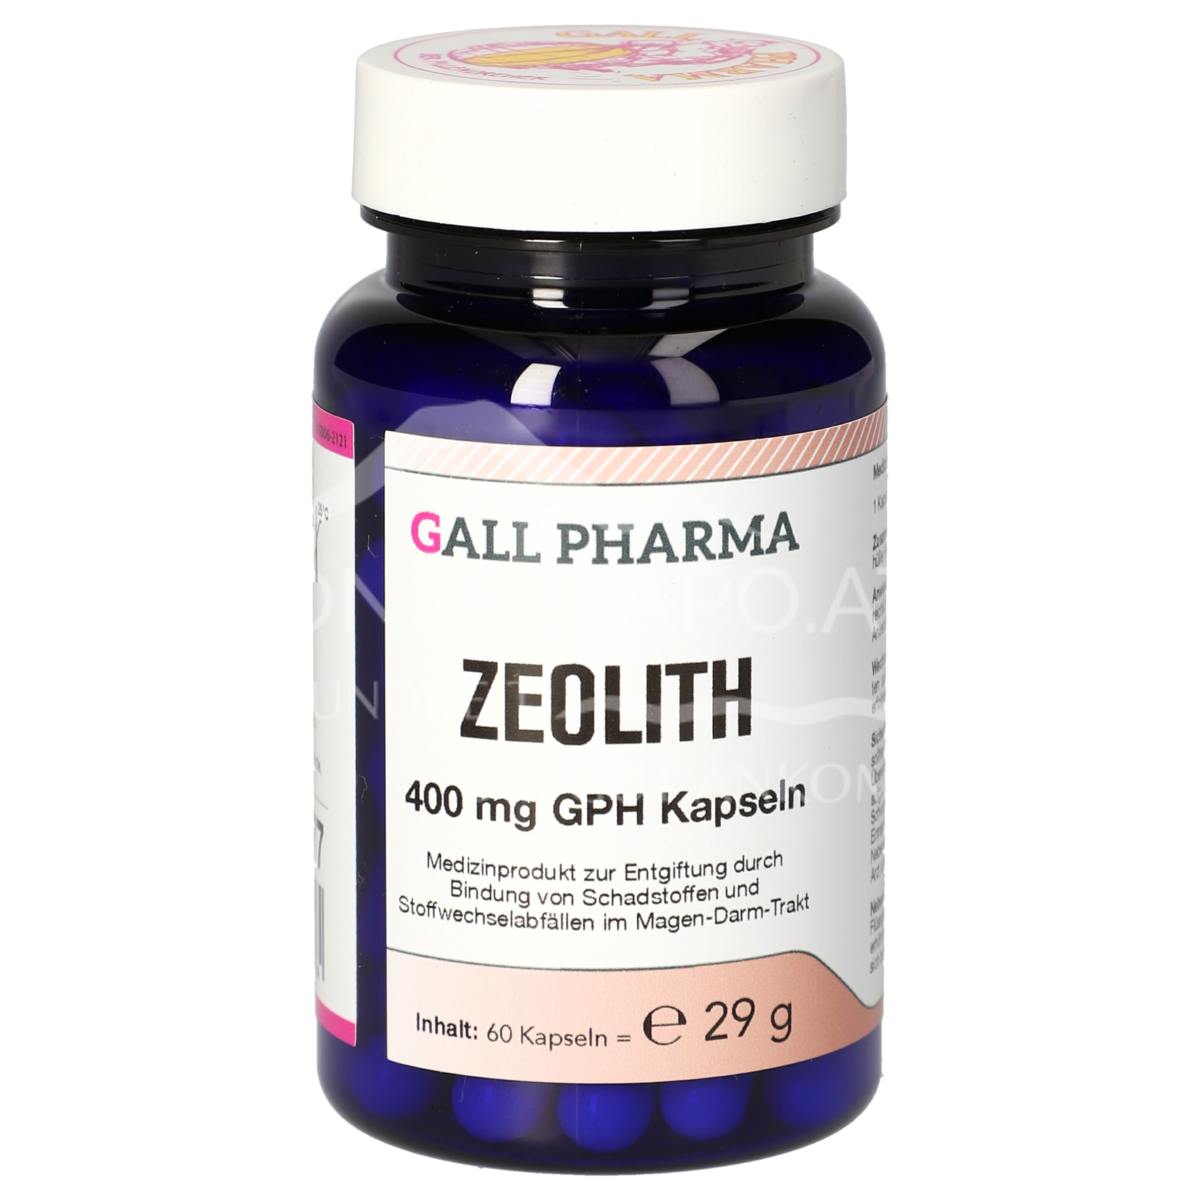 Gall Pharma Zeolith 400 mg Kapseln